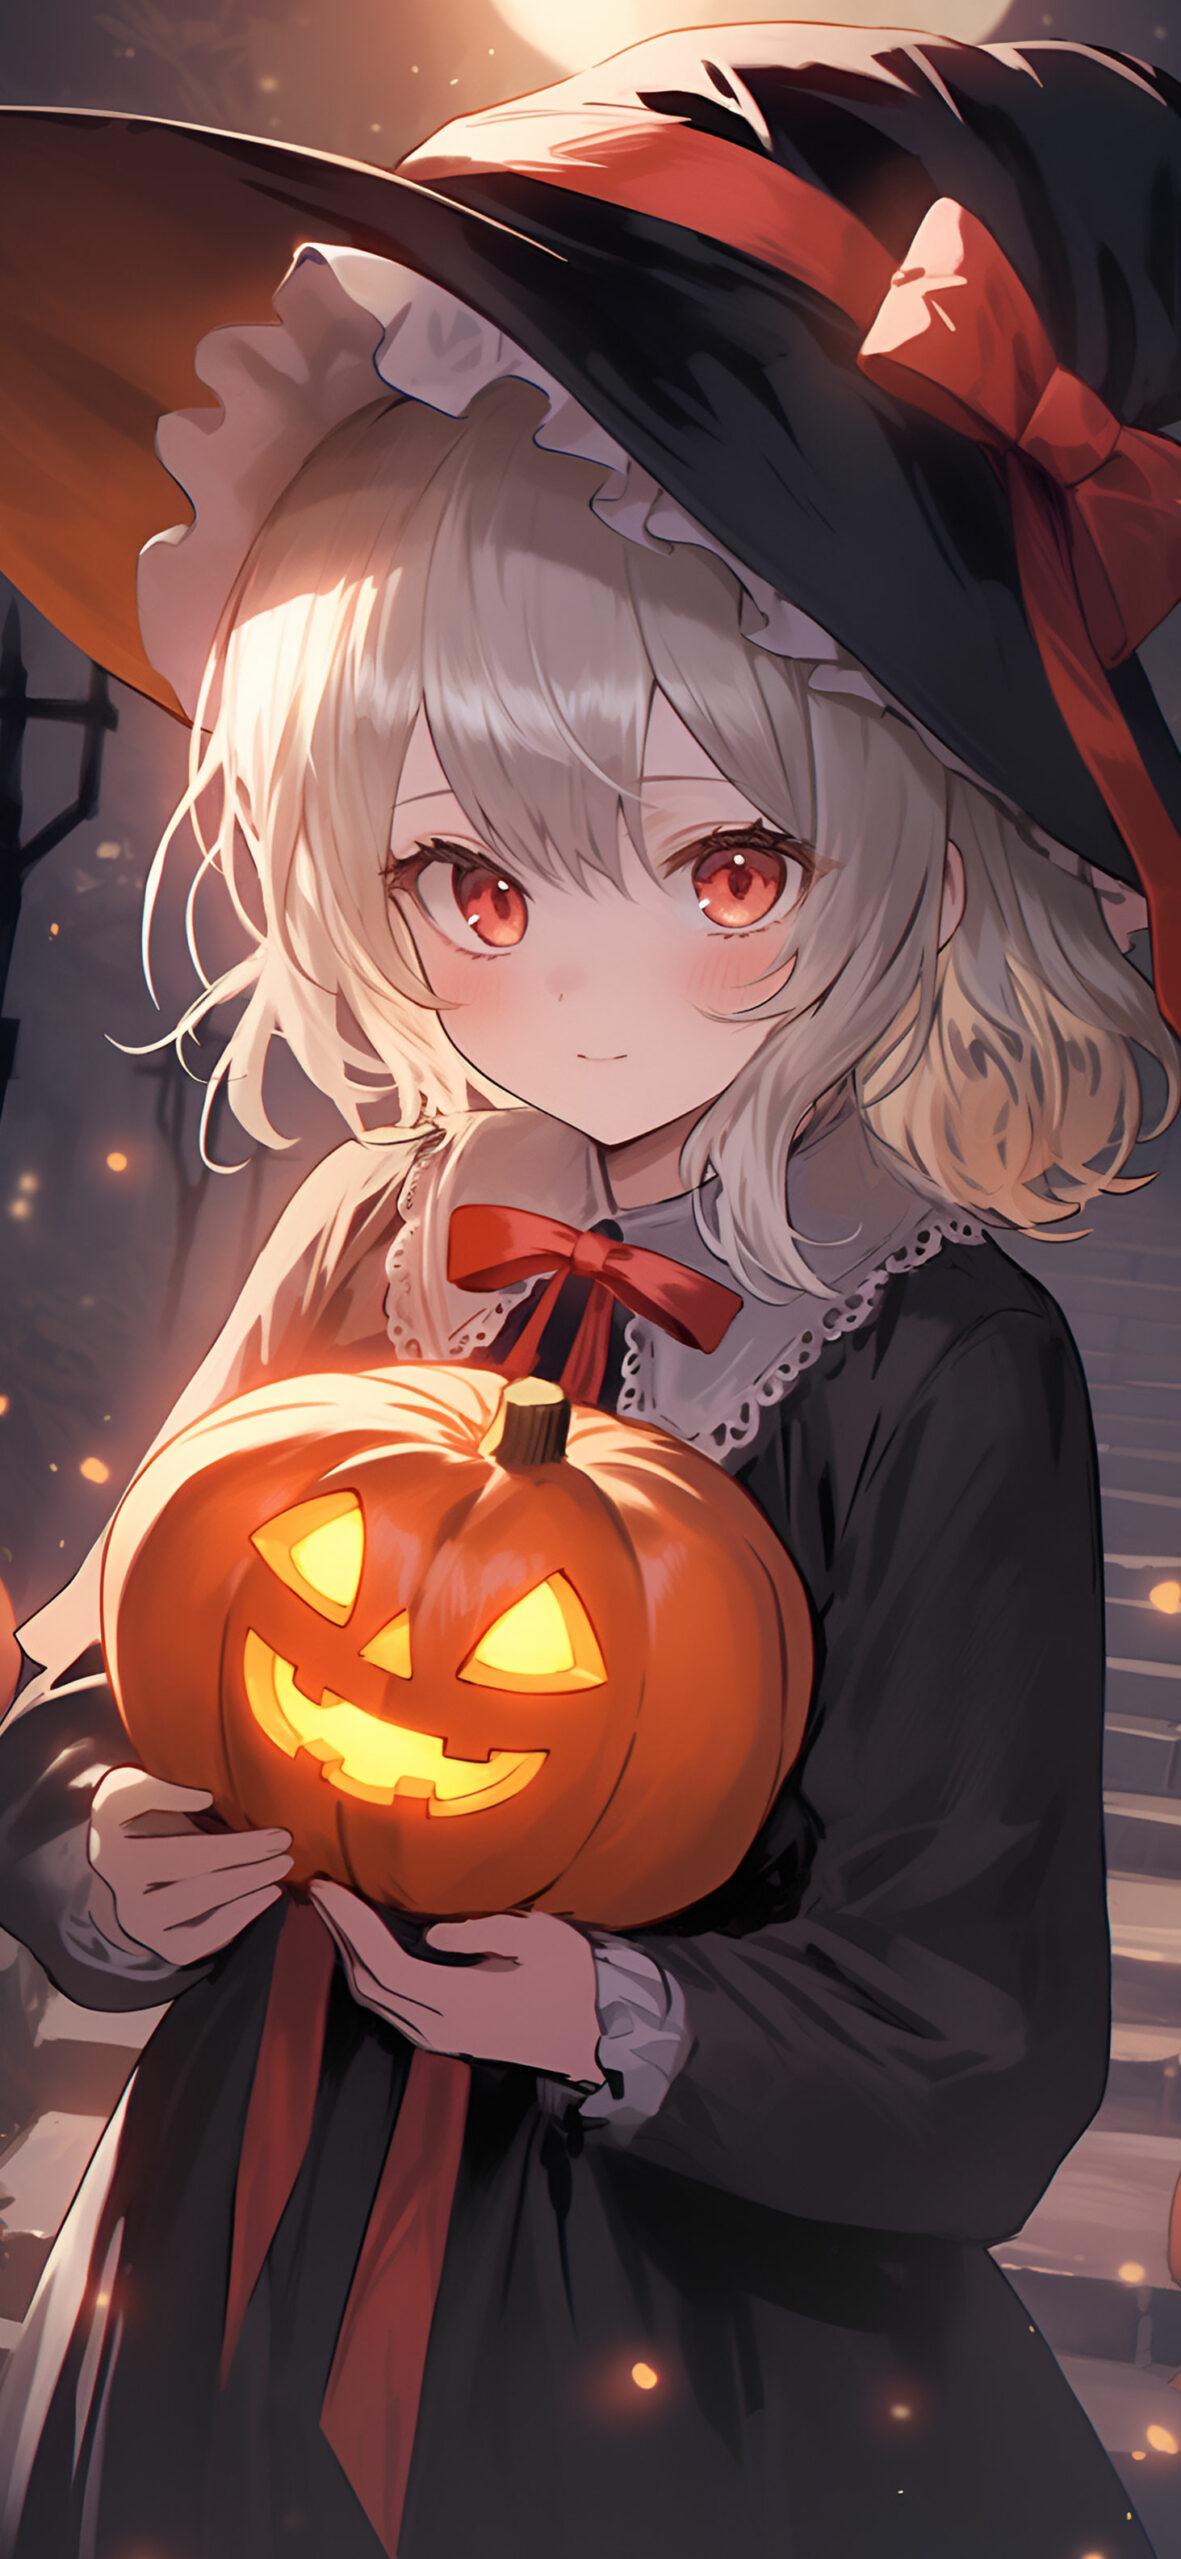 Cute Anime Girl With Jack O Lantern Halloween Wallpaper iPhone